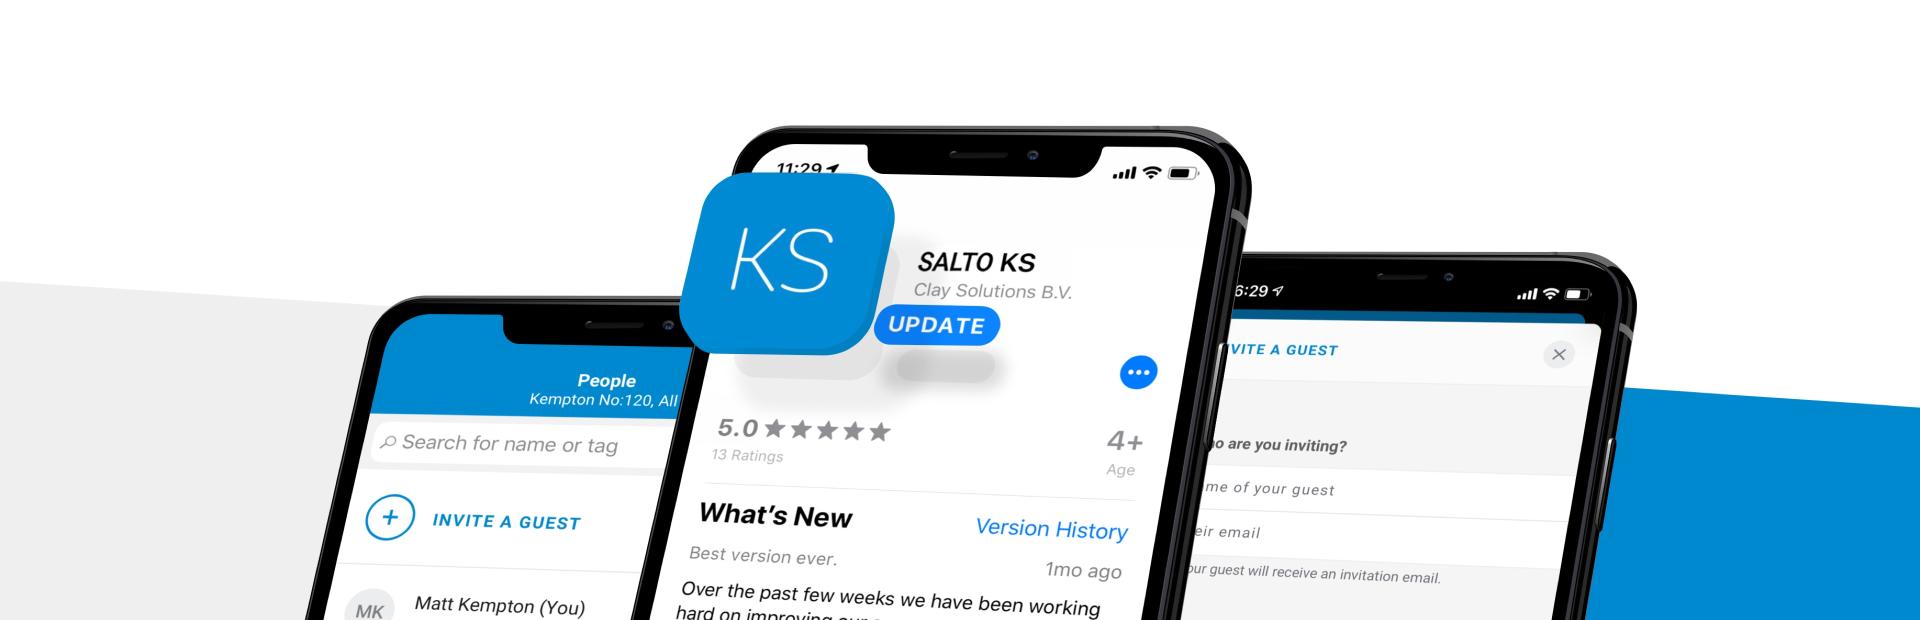 SALTO KS - Apps on Google Play